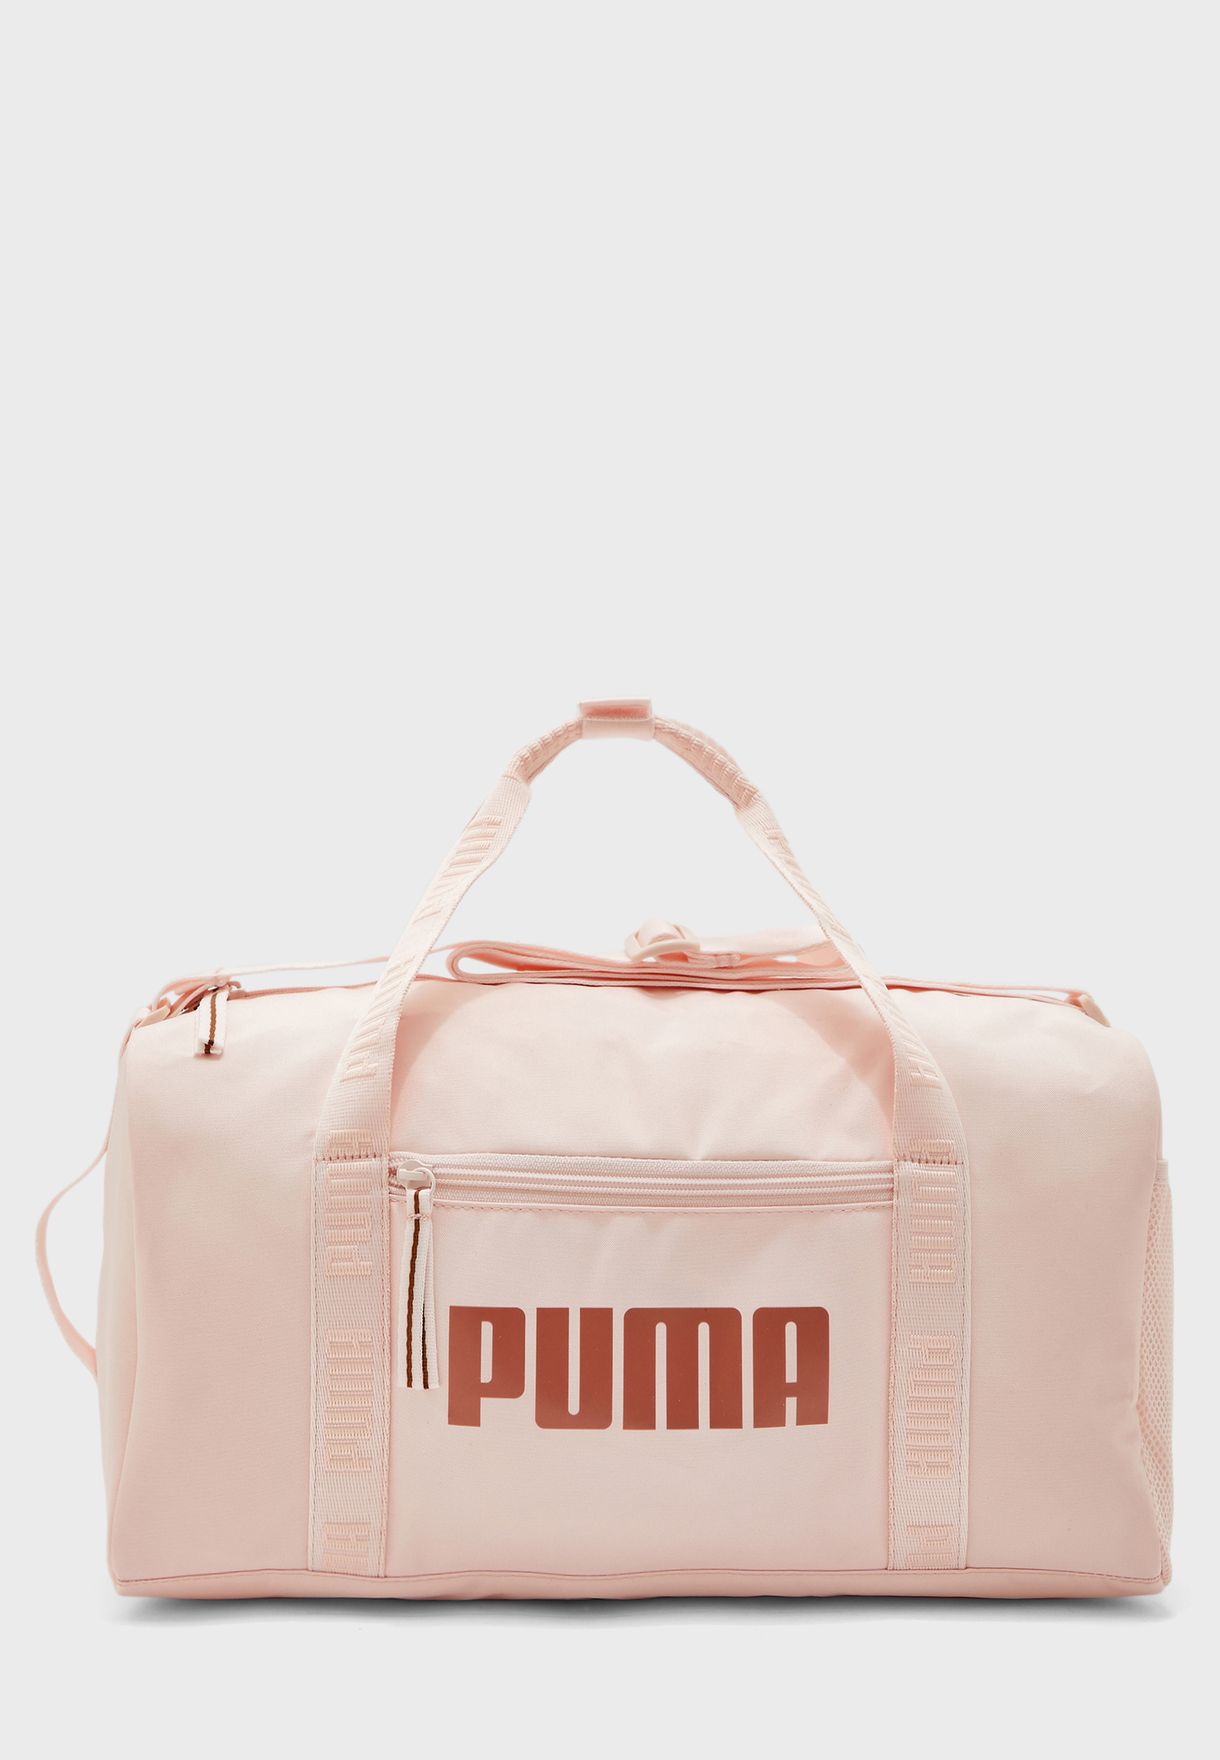 puma pink handbag